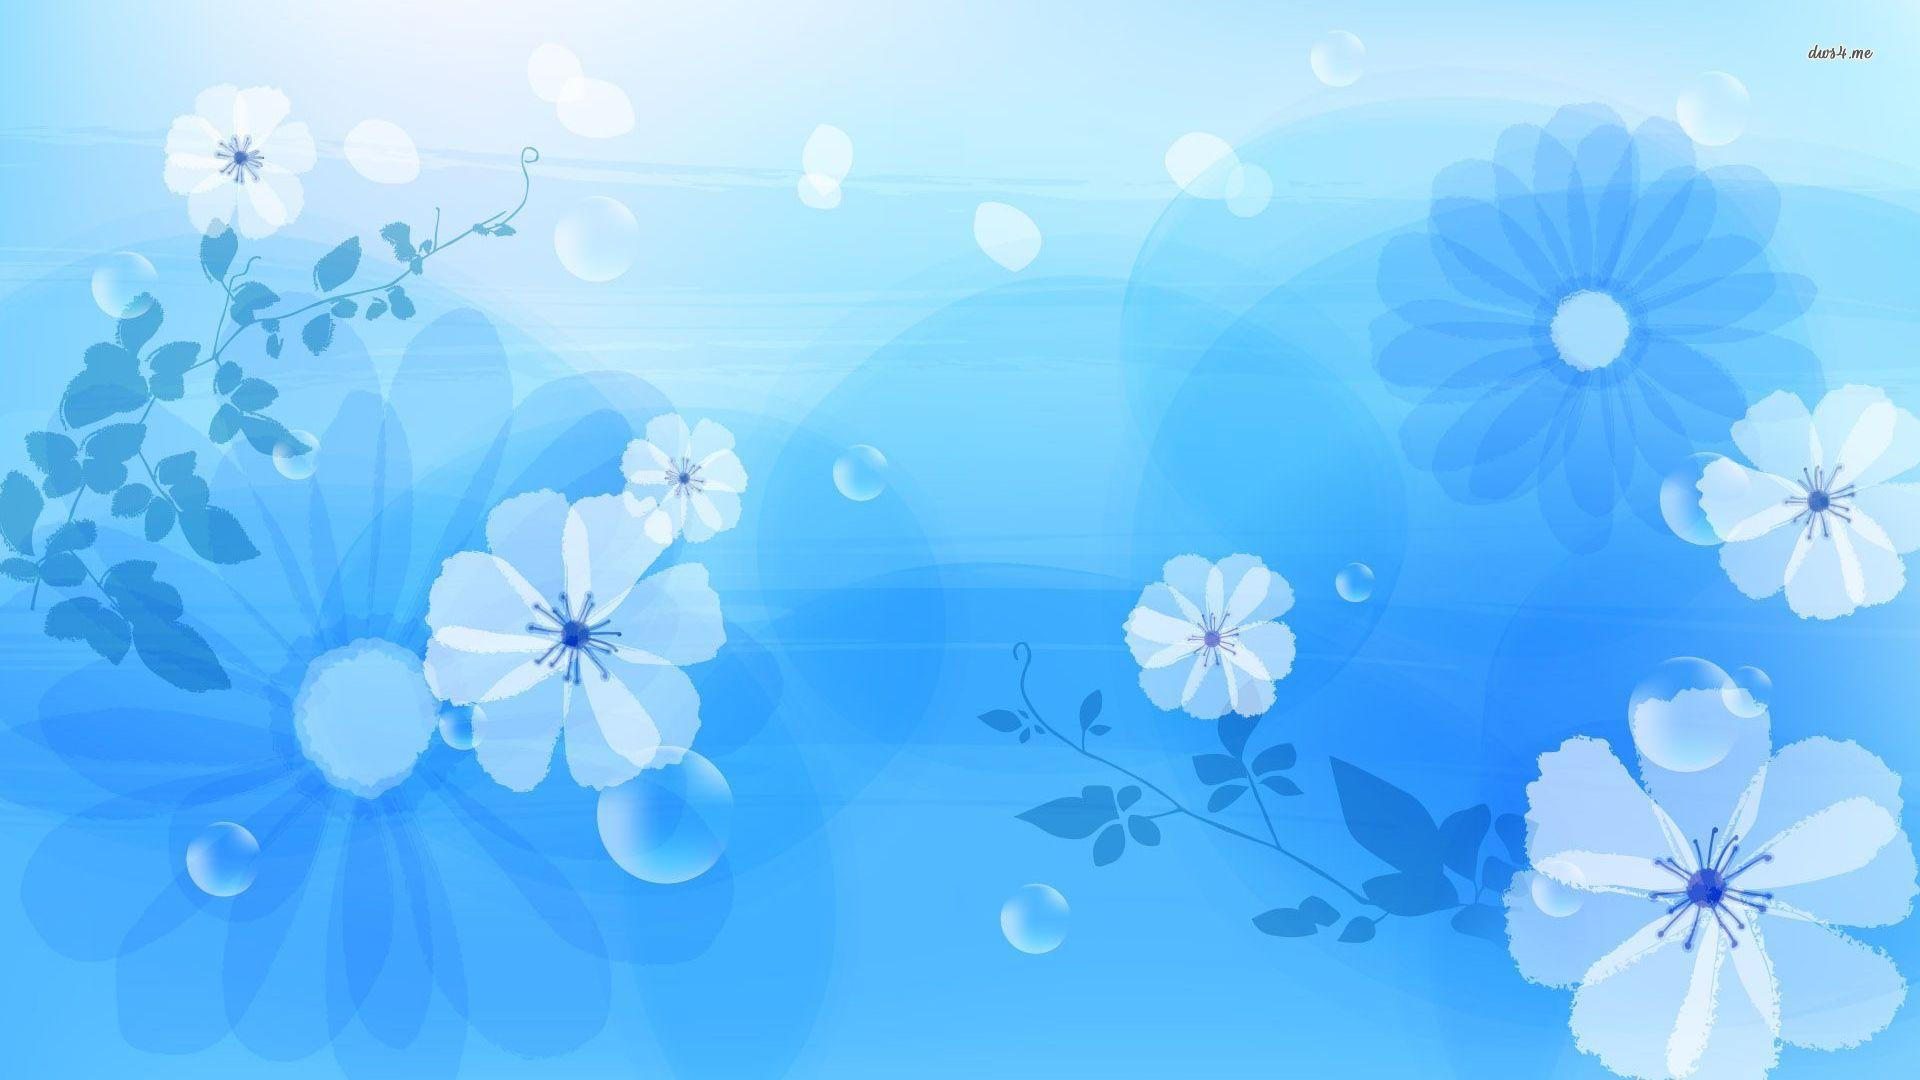 Blue Flower Wallpaper